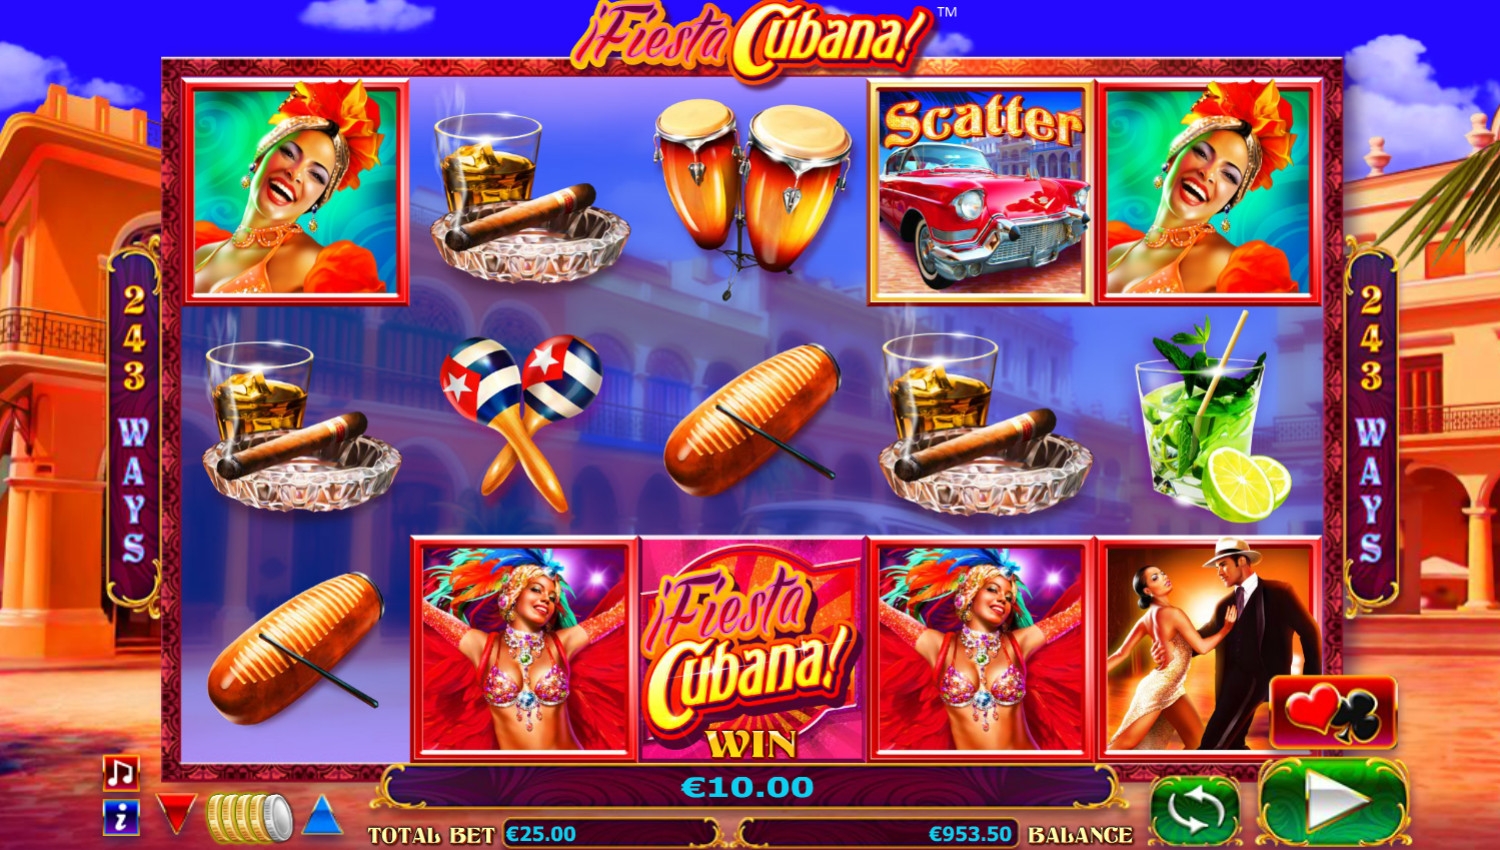 Fiesta Cubana (Fiesta Cubana) from category Slots